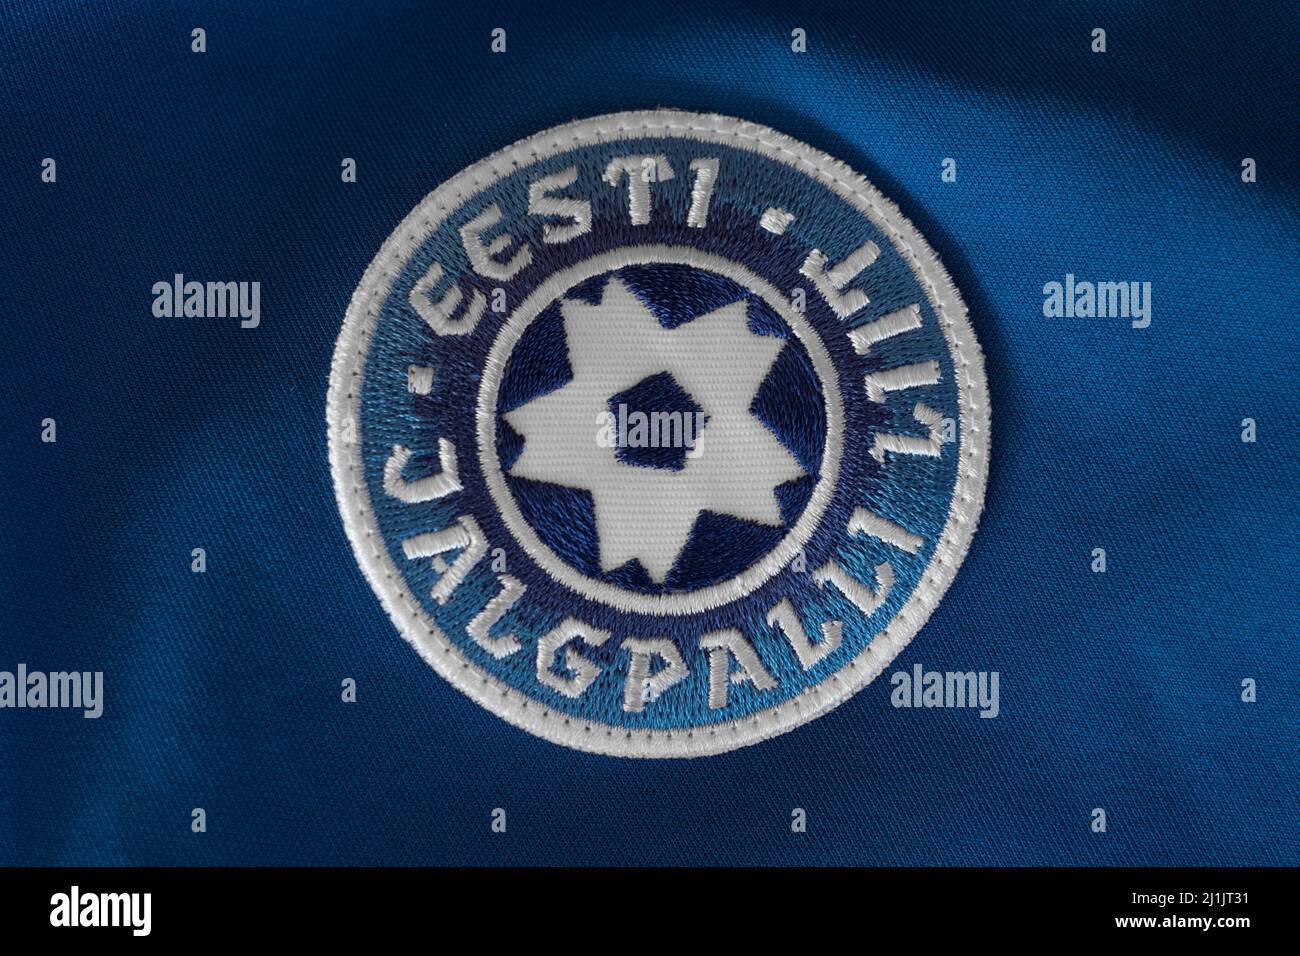 Eesti Jalgpalli Liit (Estonian Football Association) emblem on a blue national team shirt. Estonian soccer federation logo. Stock Photo